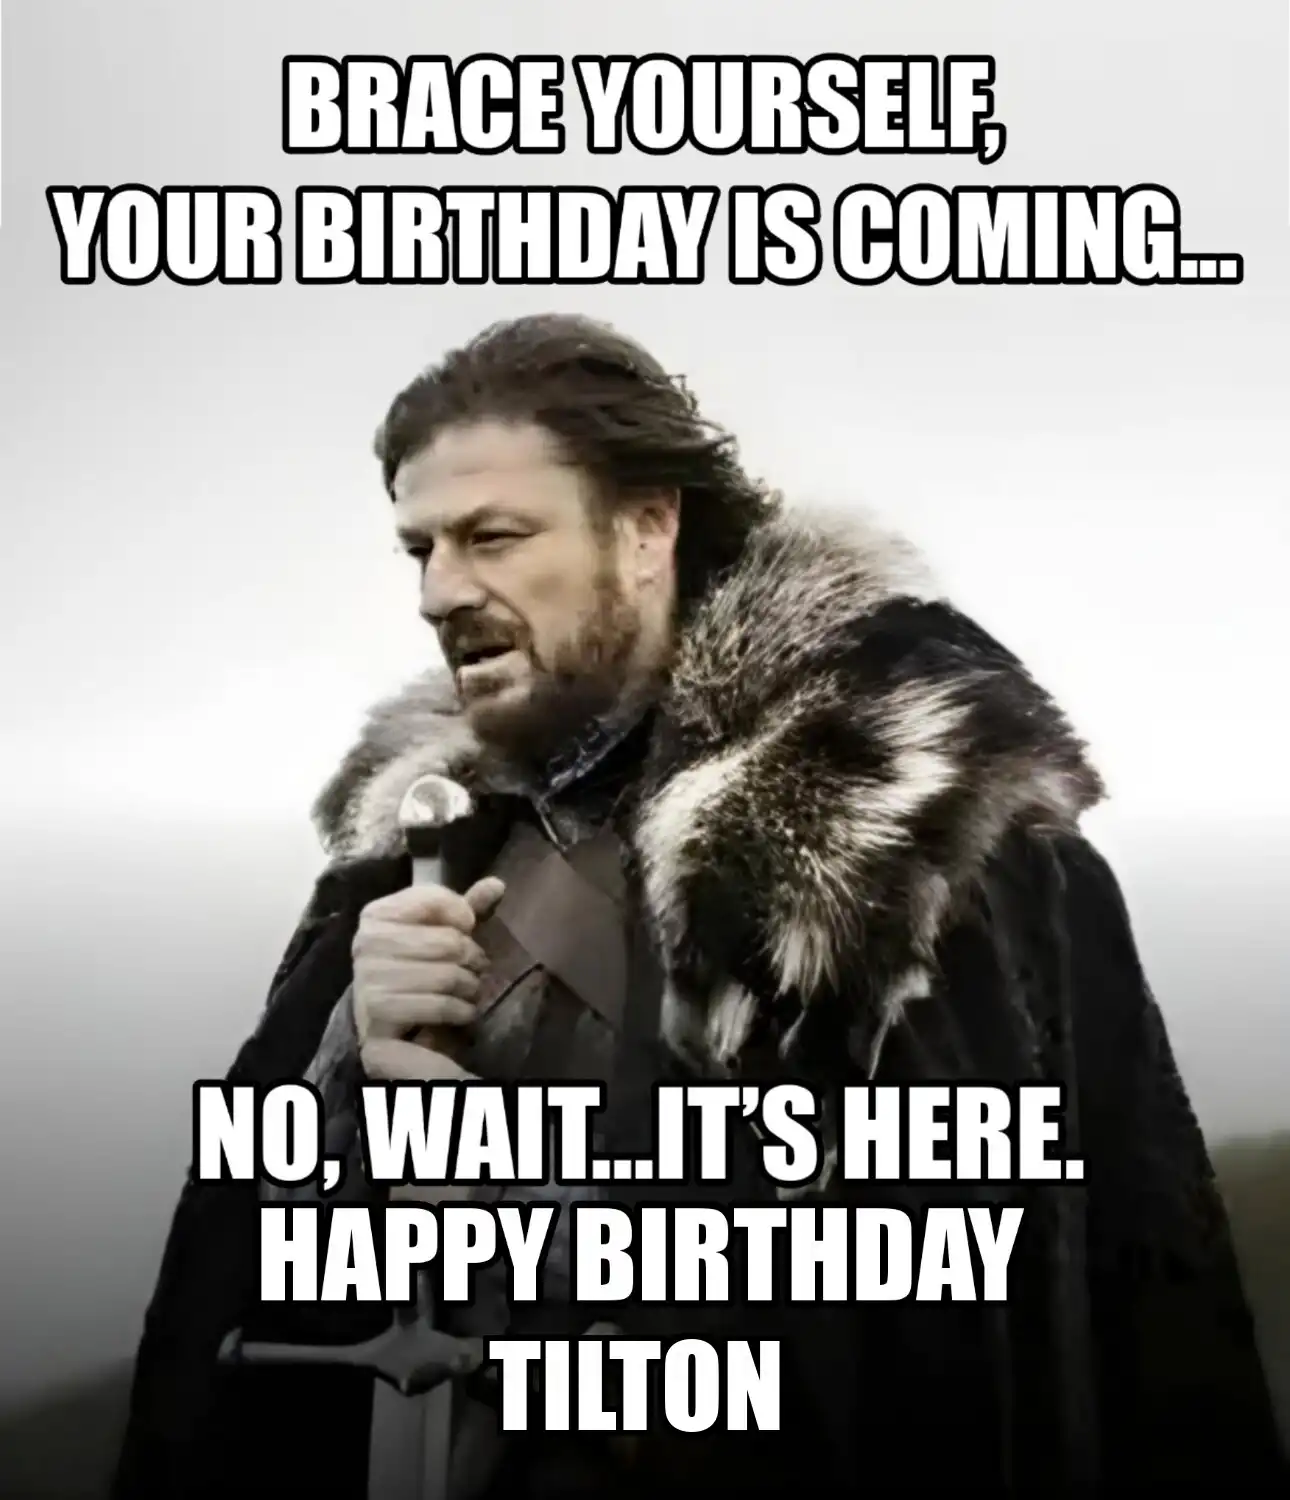 Happy Birthday Tilton Brace Yourself Your Birthday Is Coming Meme